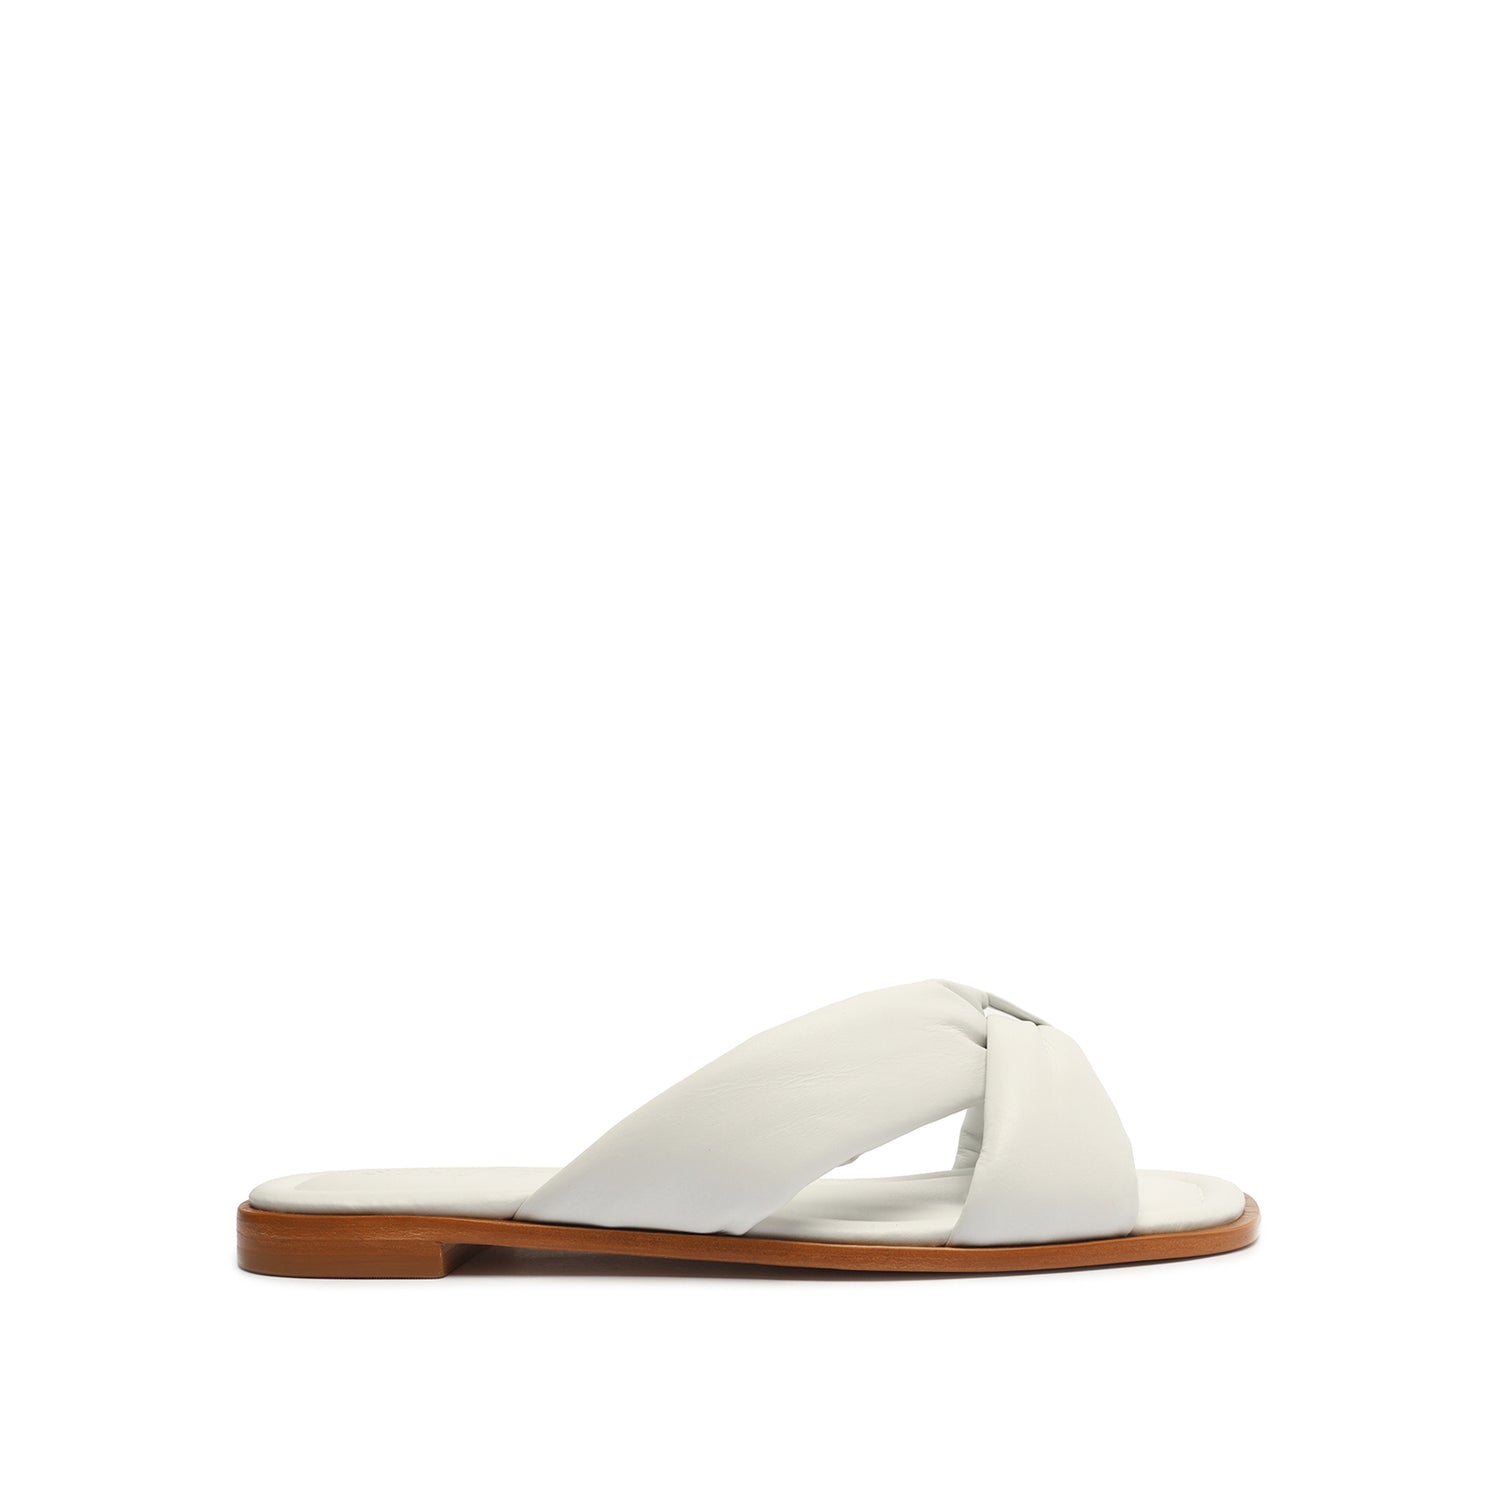 Fairy Leather Flat Flats Summer 22 5 White Atanado Leather - Schutz Shoes